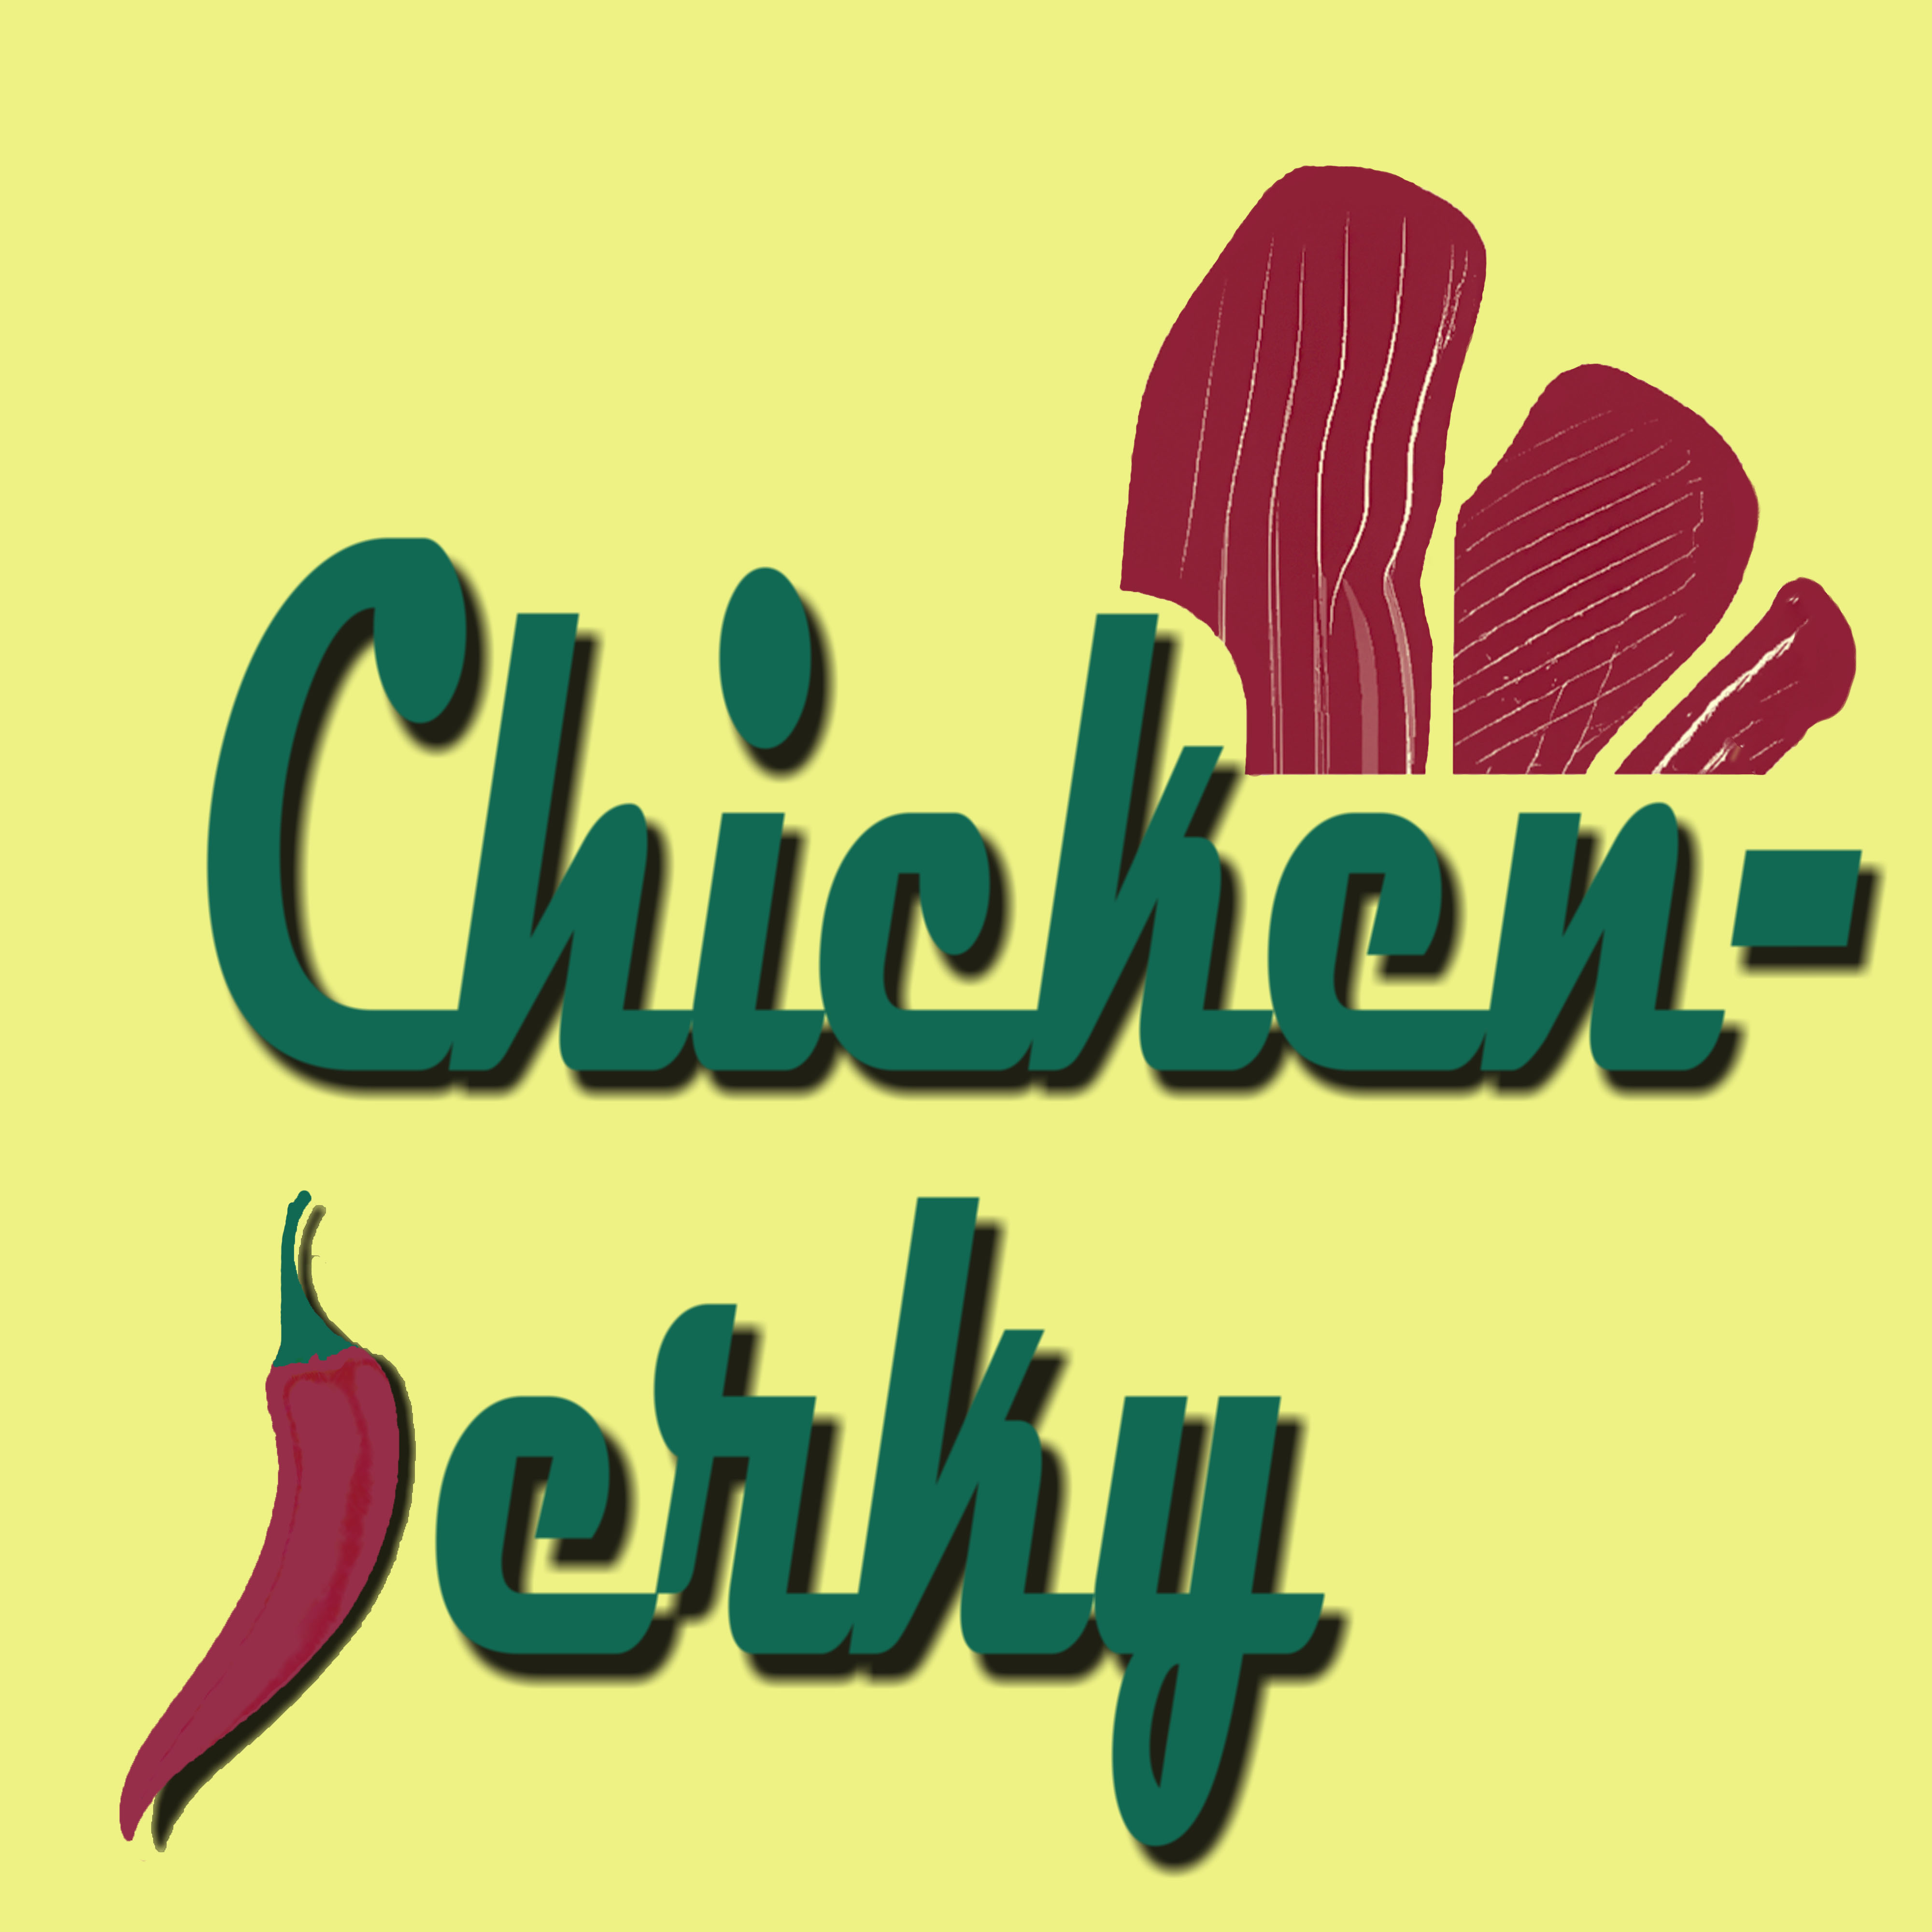 Chicken-jerky logo cover image.